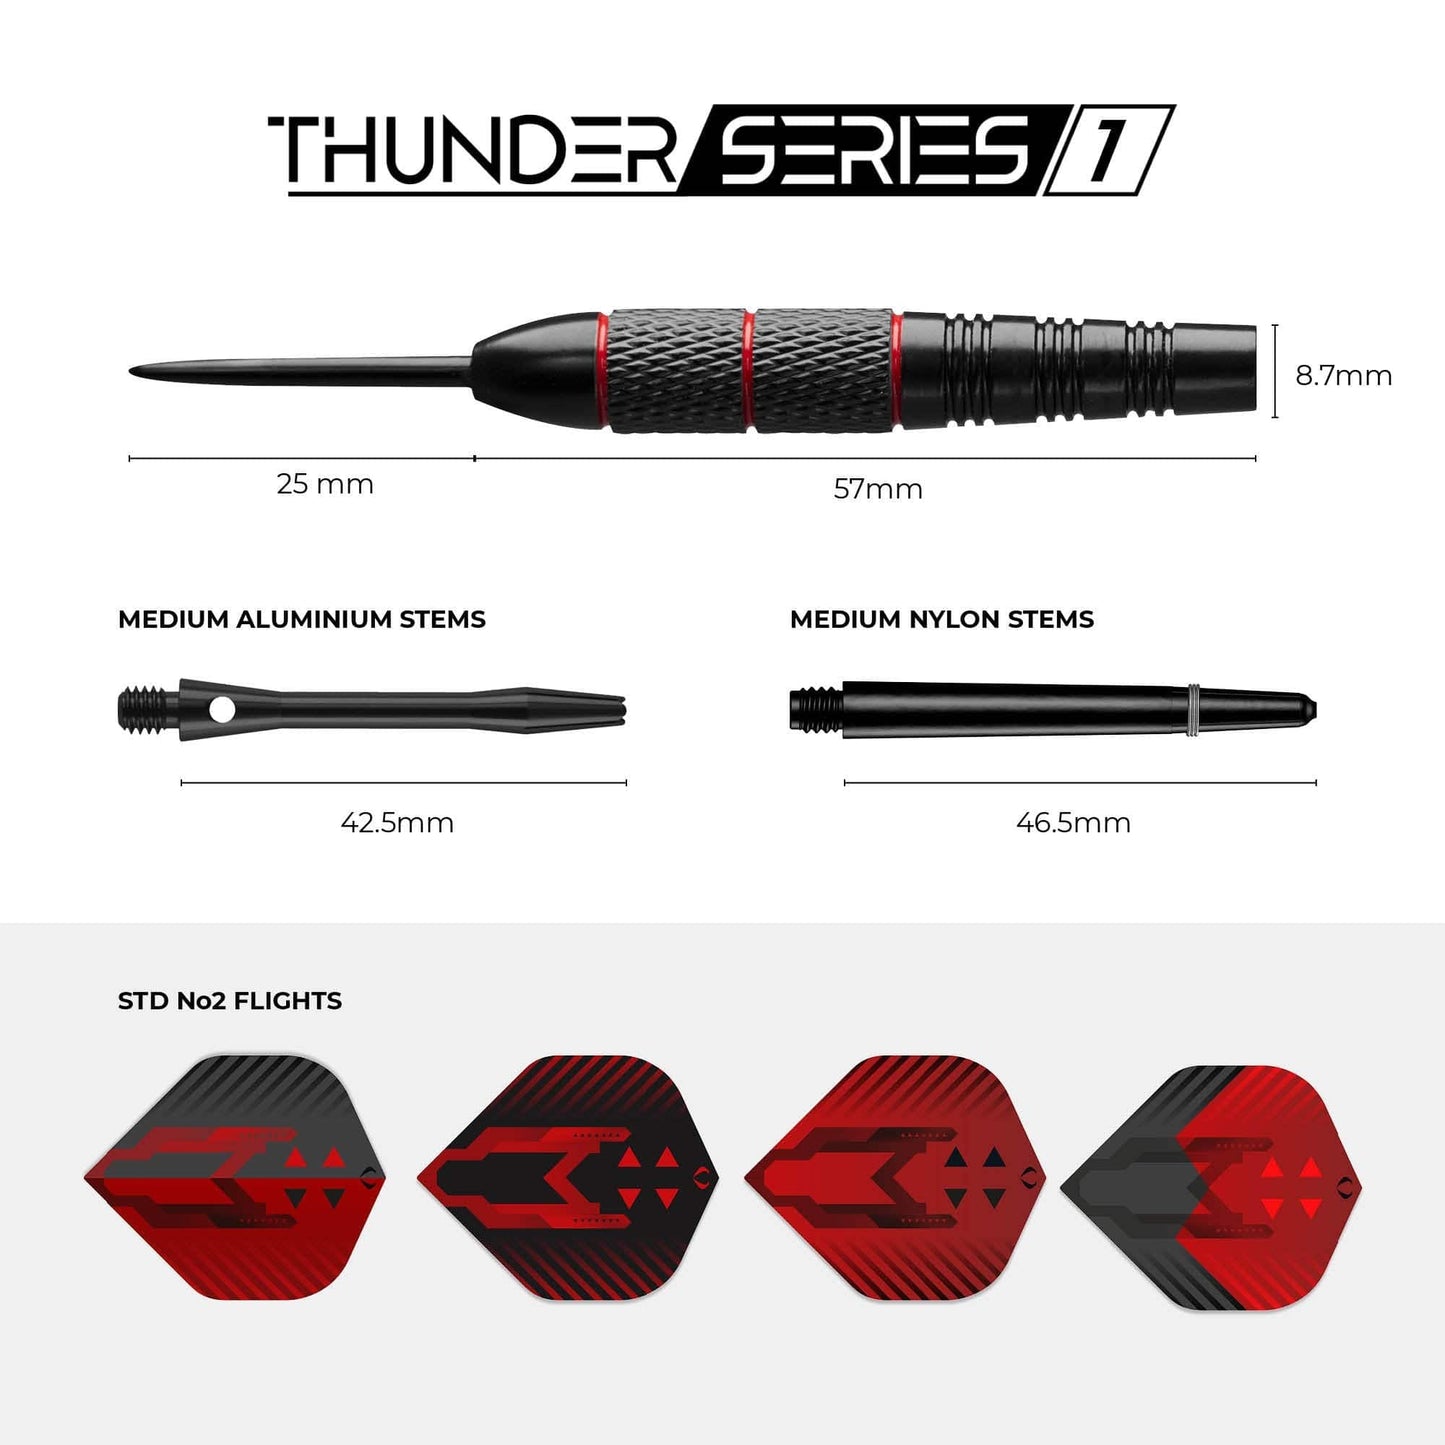 Darts Corner - Thunder Series 1 - Steel Tip Brass - 2 Sets Darts - M1 - Black & Red - 22g 22g